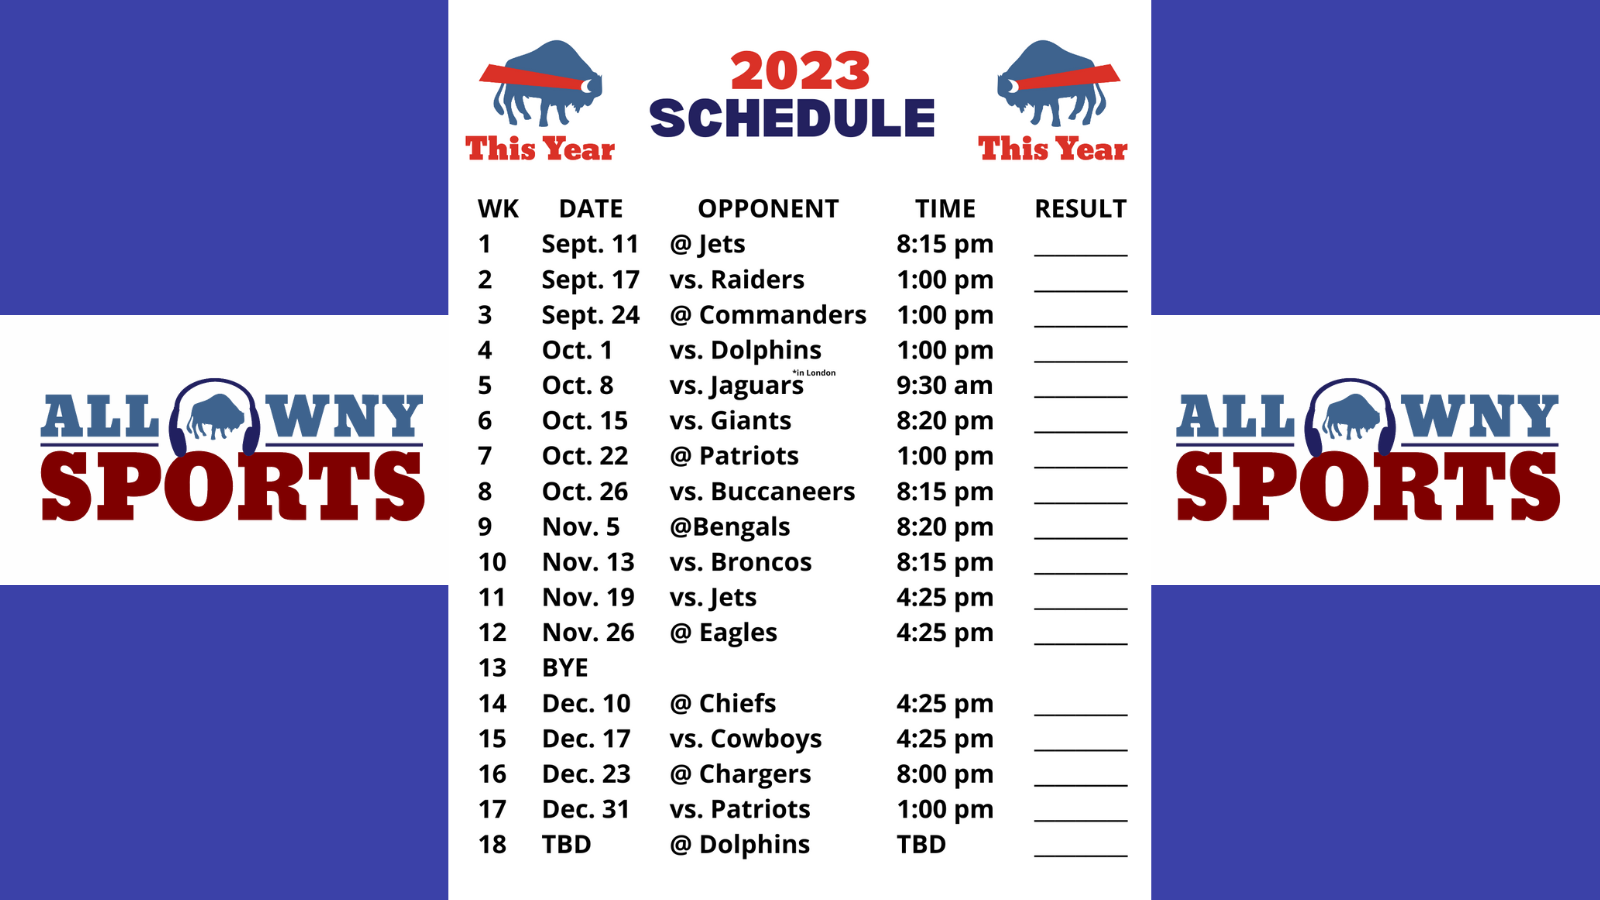 Bills 2023 schedule released - All WNY